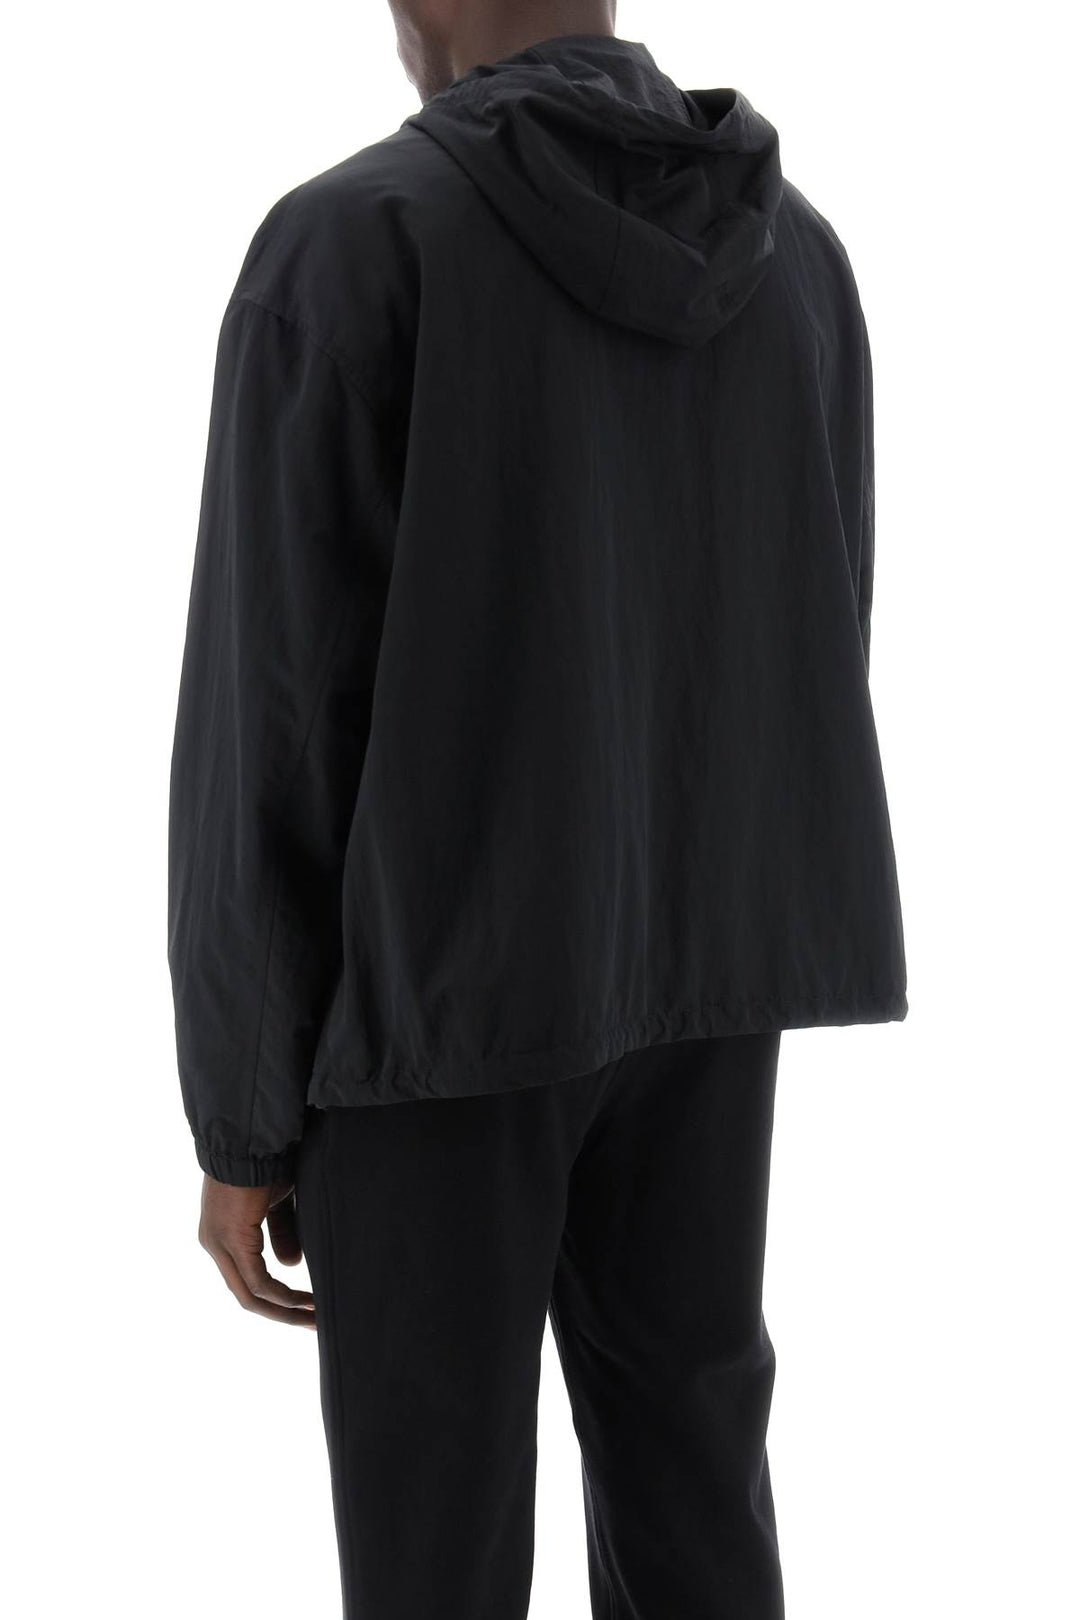 Burberry Lightweight Nylon Jacket By Ekd   Black